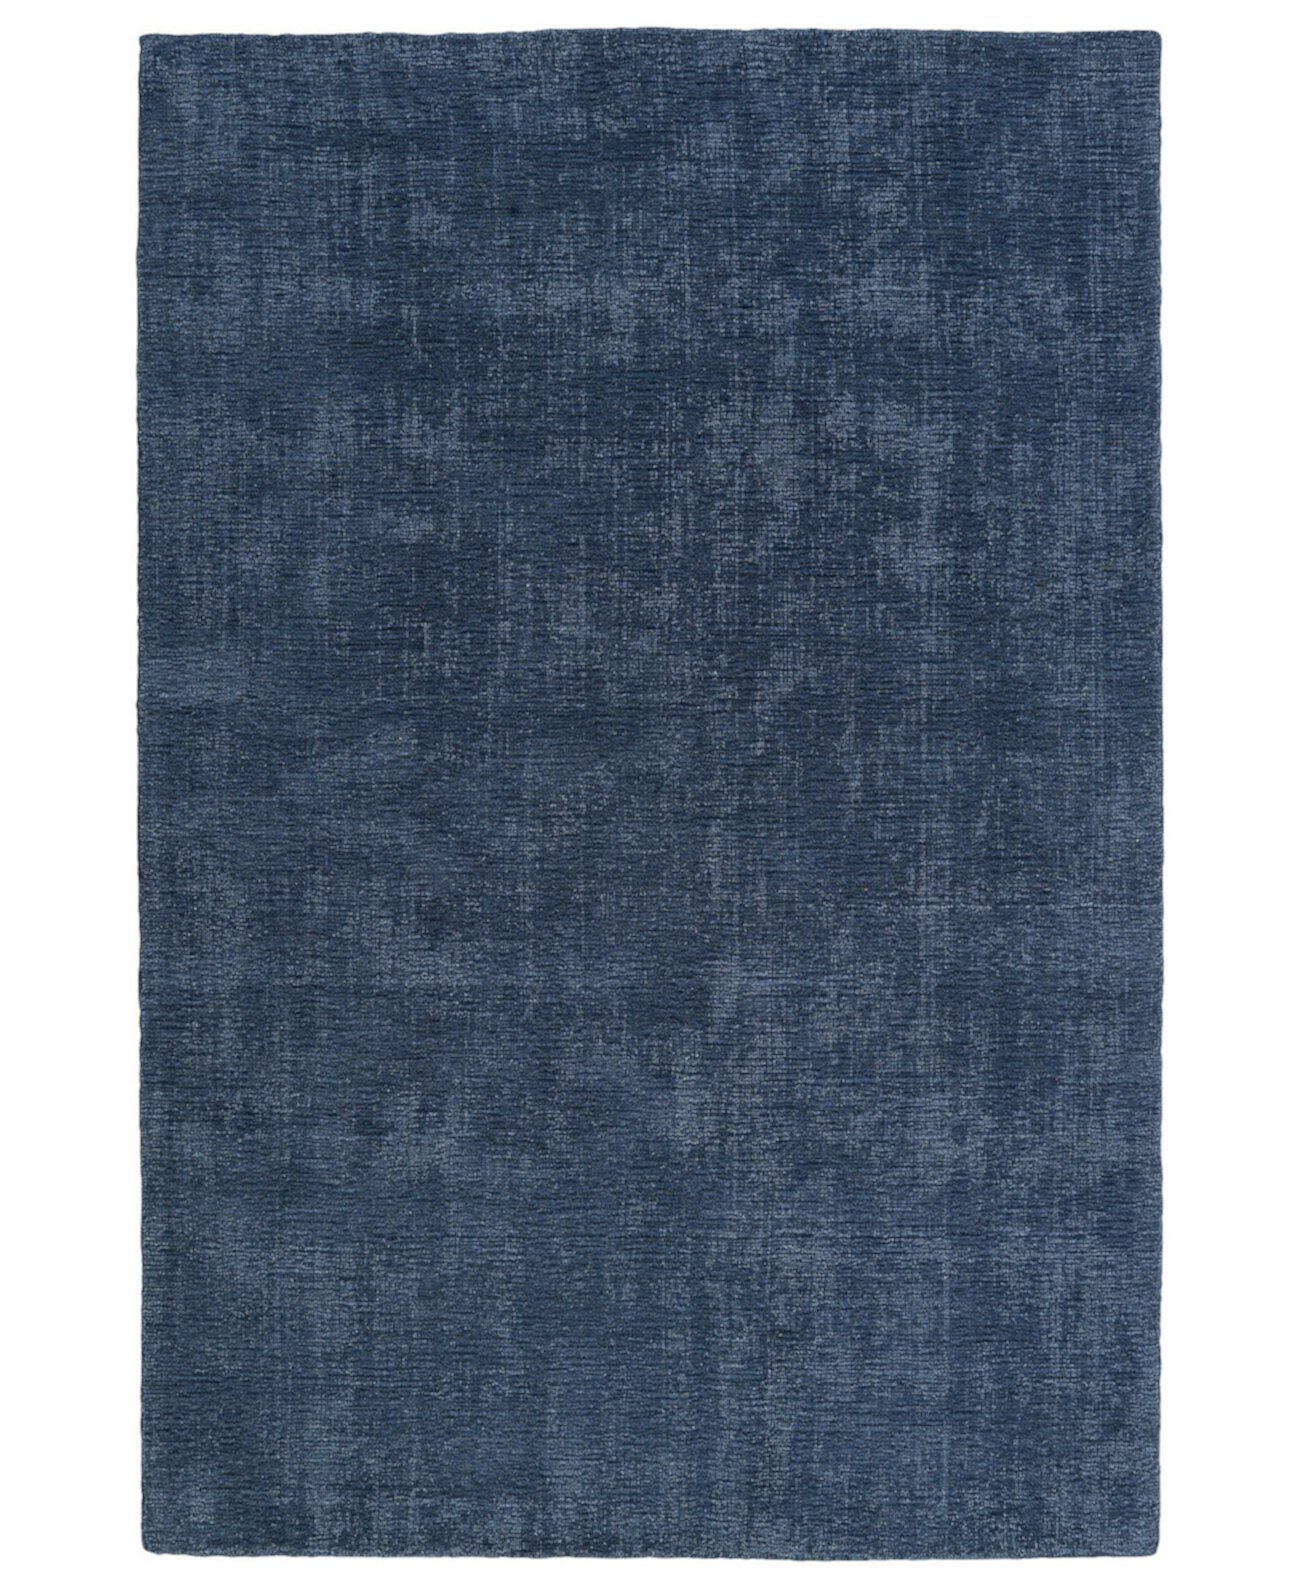 Lauderdale LDD01-17 Синий коврик для улицы размером 3 х 5 футов 6 дюймов Kaleen